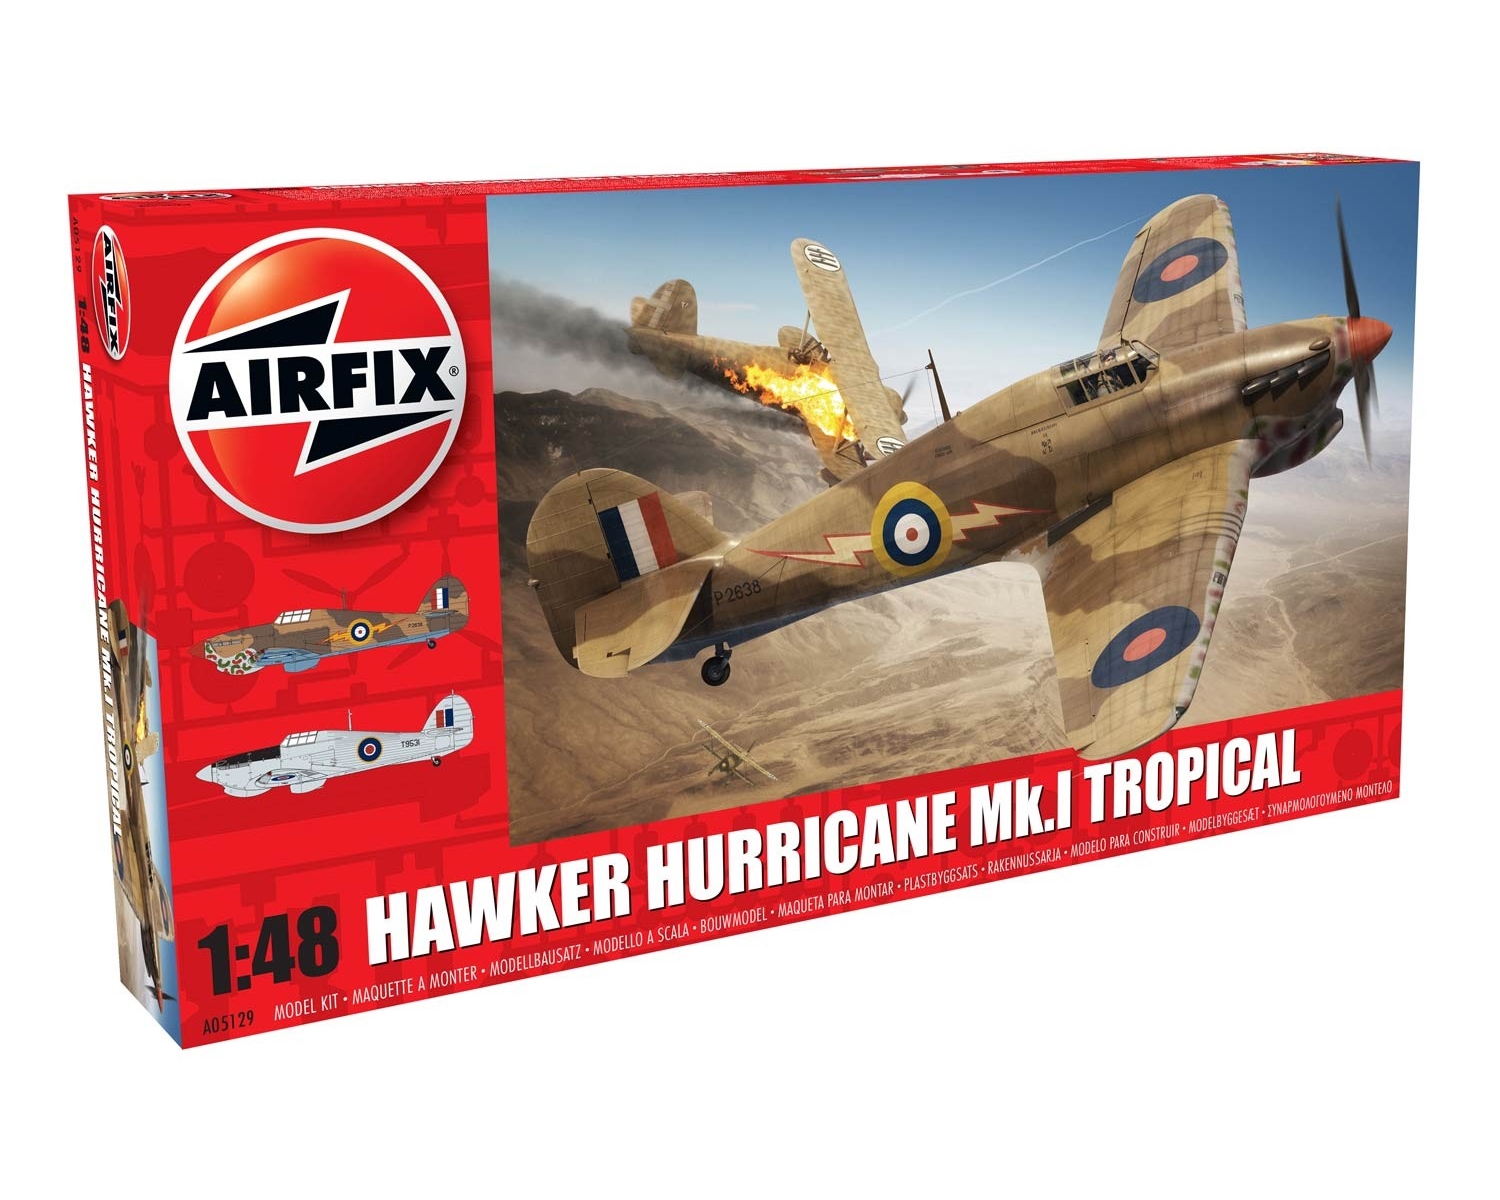 Airfix 05129 - HAWKER HURRICANE MK.I TROPICAL